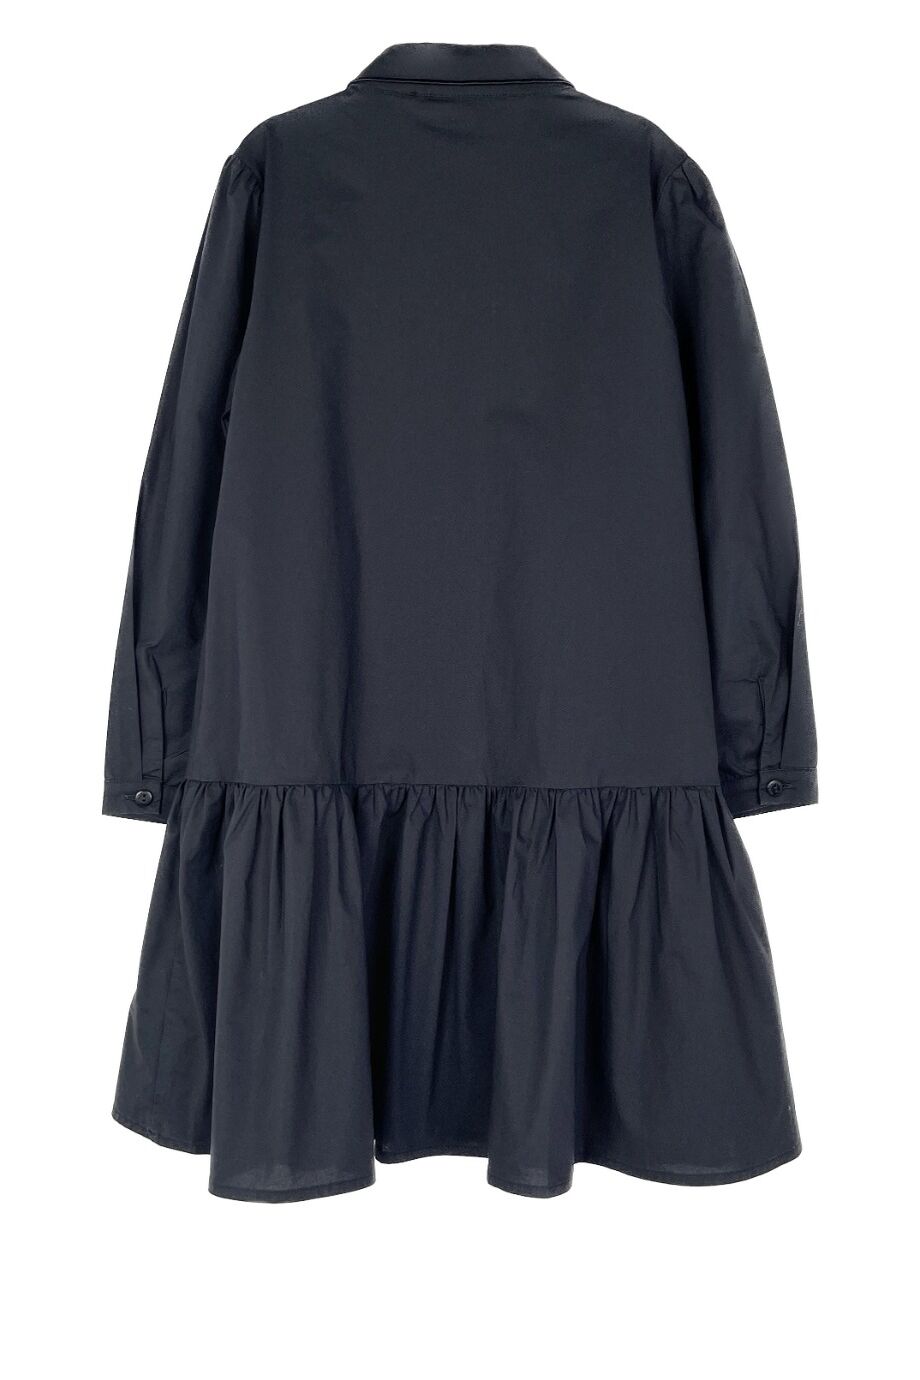 image 2 Детское платье рубашка чёрного цвета